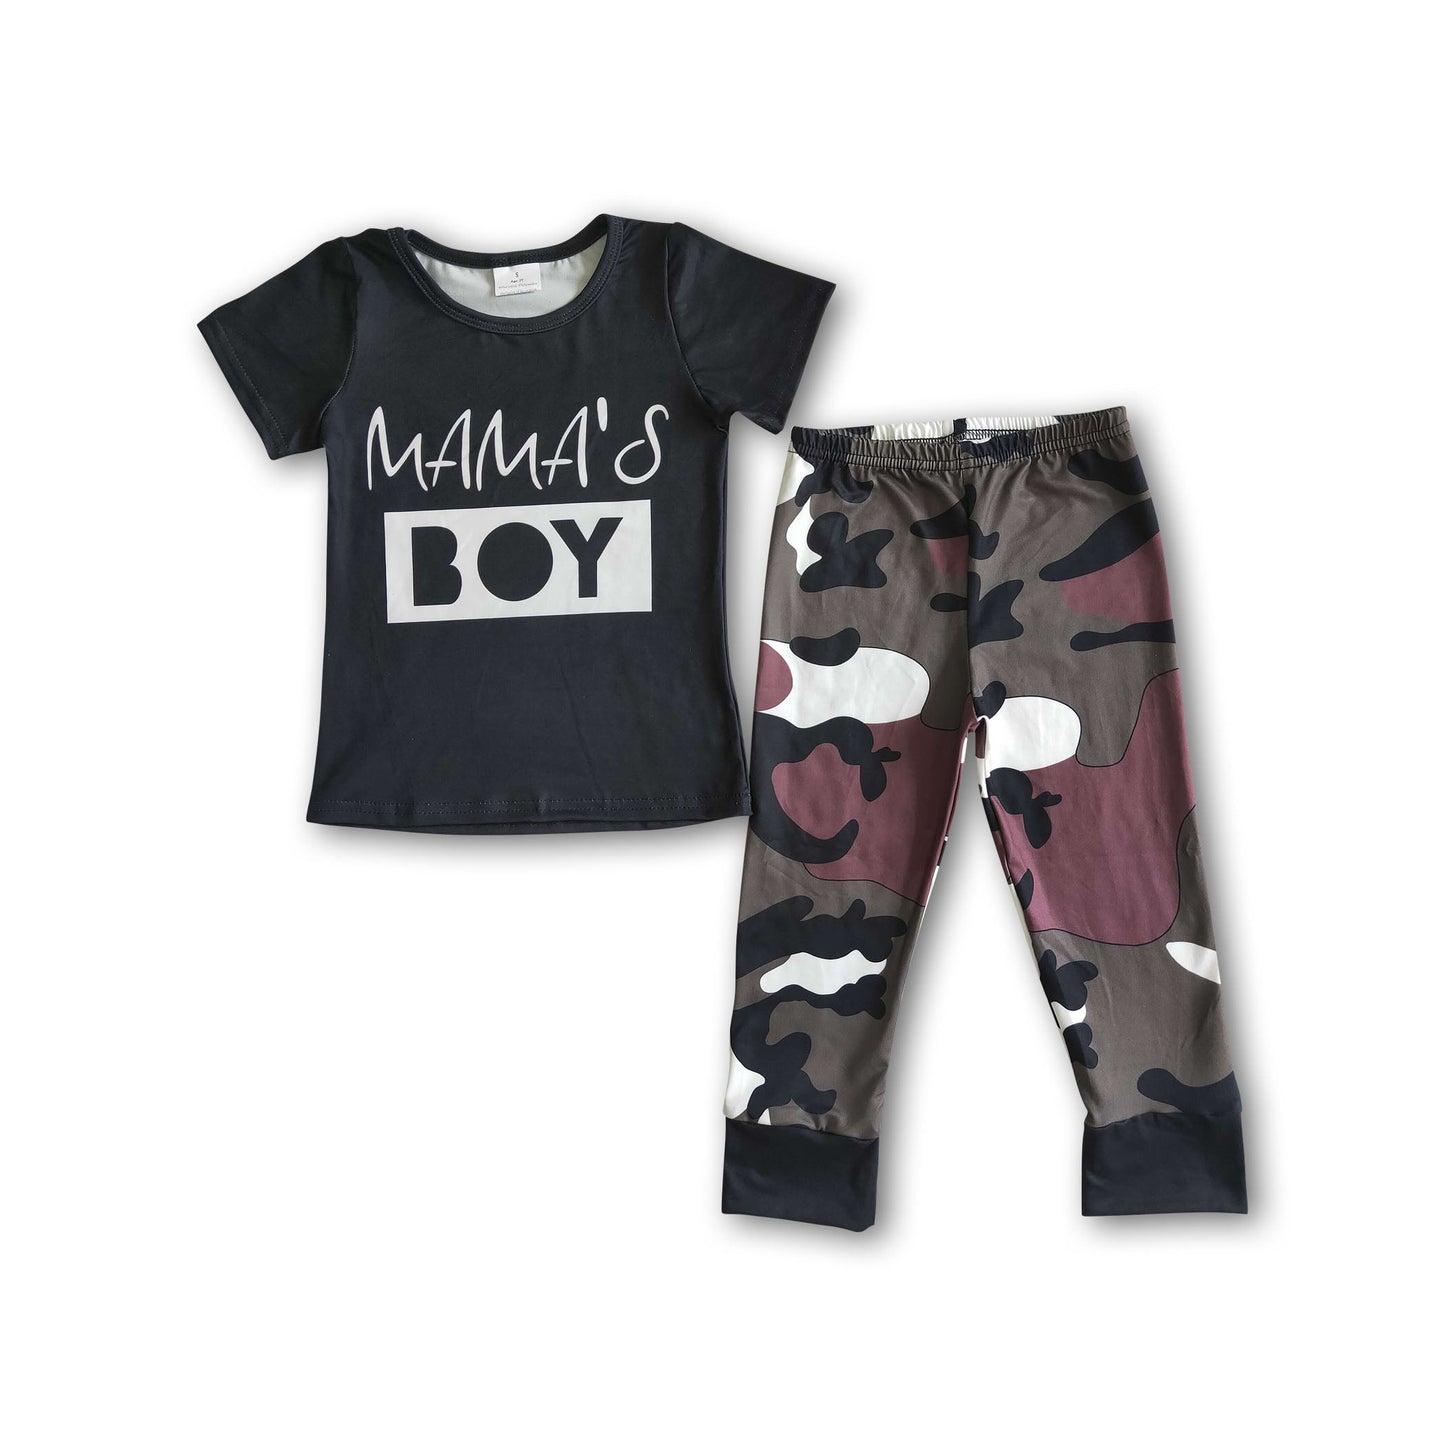 Mama's boy black shirt camo pants baby kids clothing set – Yawoo Garments